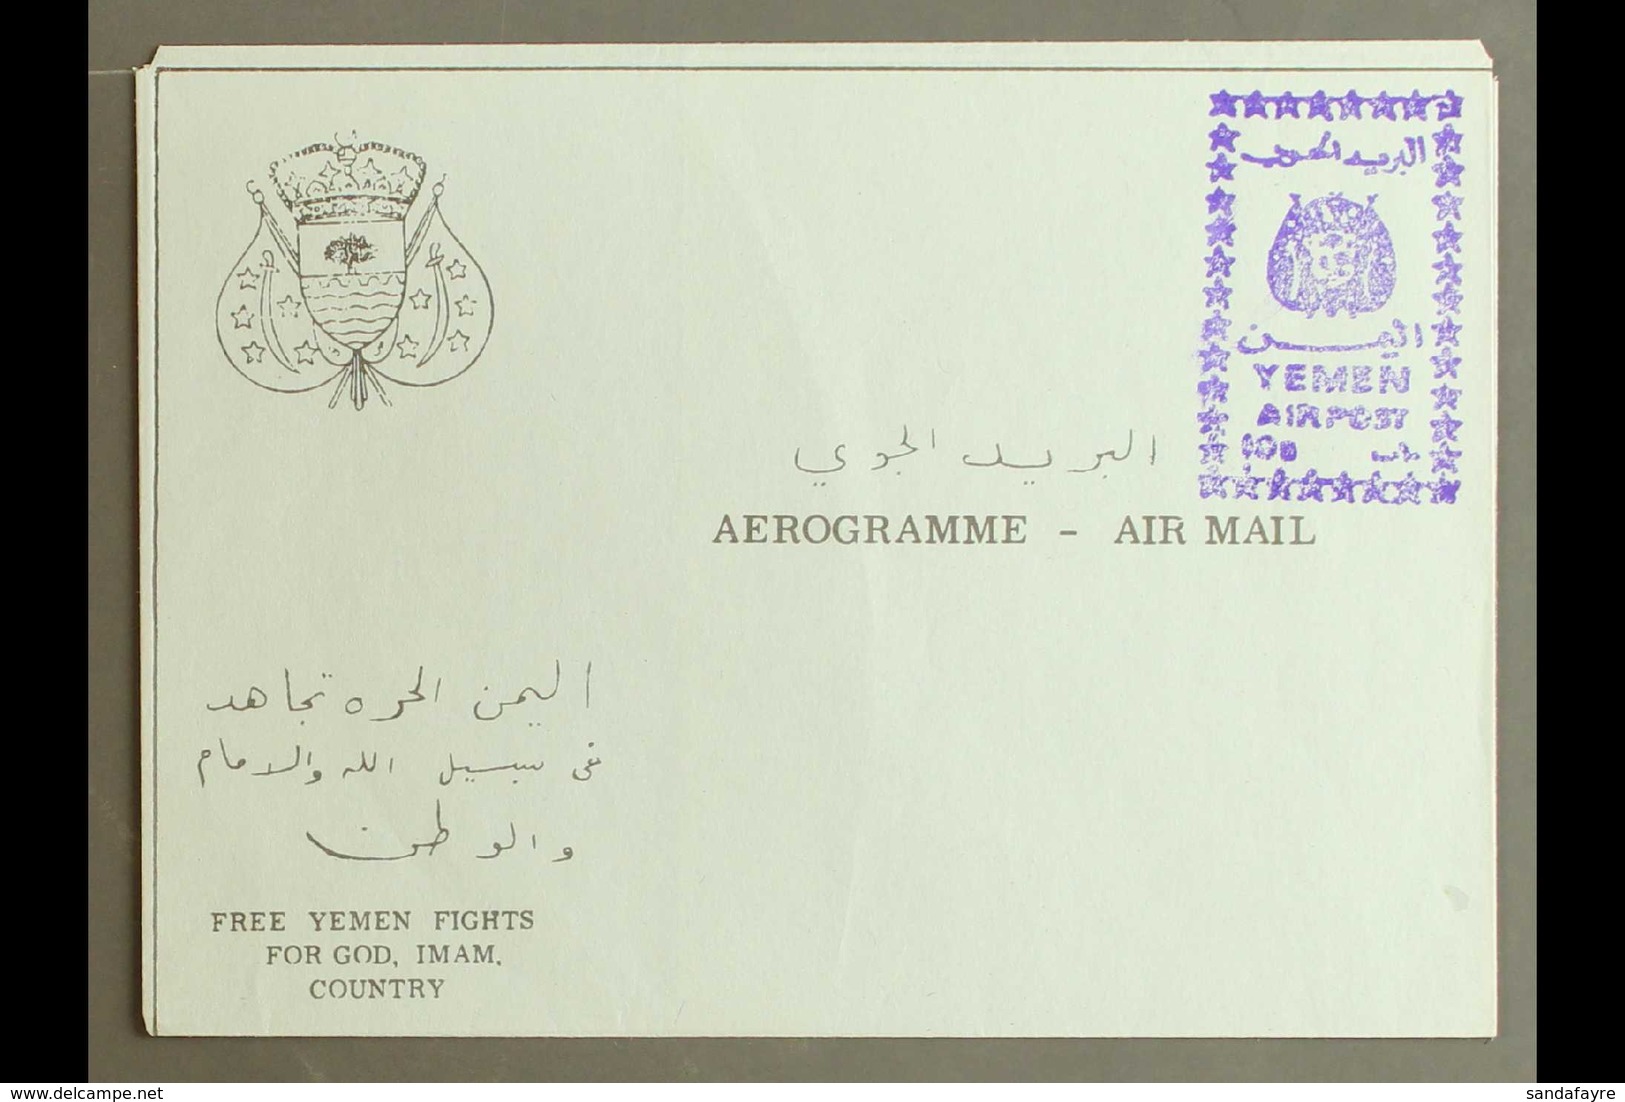 ROYALIST 1967 10b Violet "YEMEN AIRPOST" Handstamp (as SG R135a/f) Applied To Complete Light Blue Aerogramme, Very Fine  - Yemen